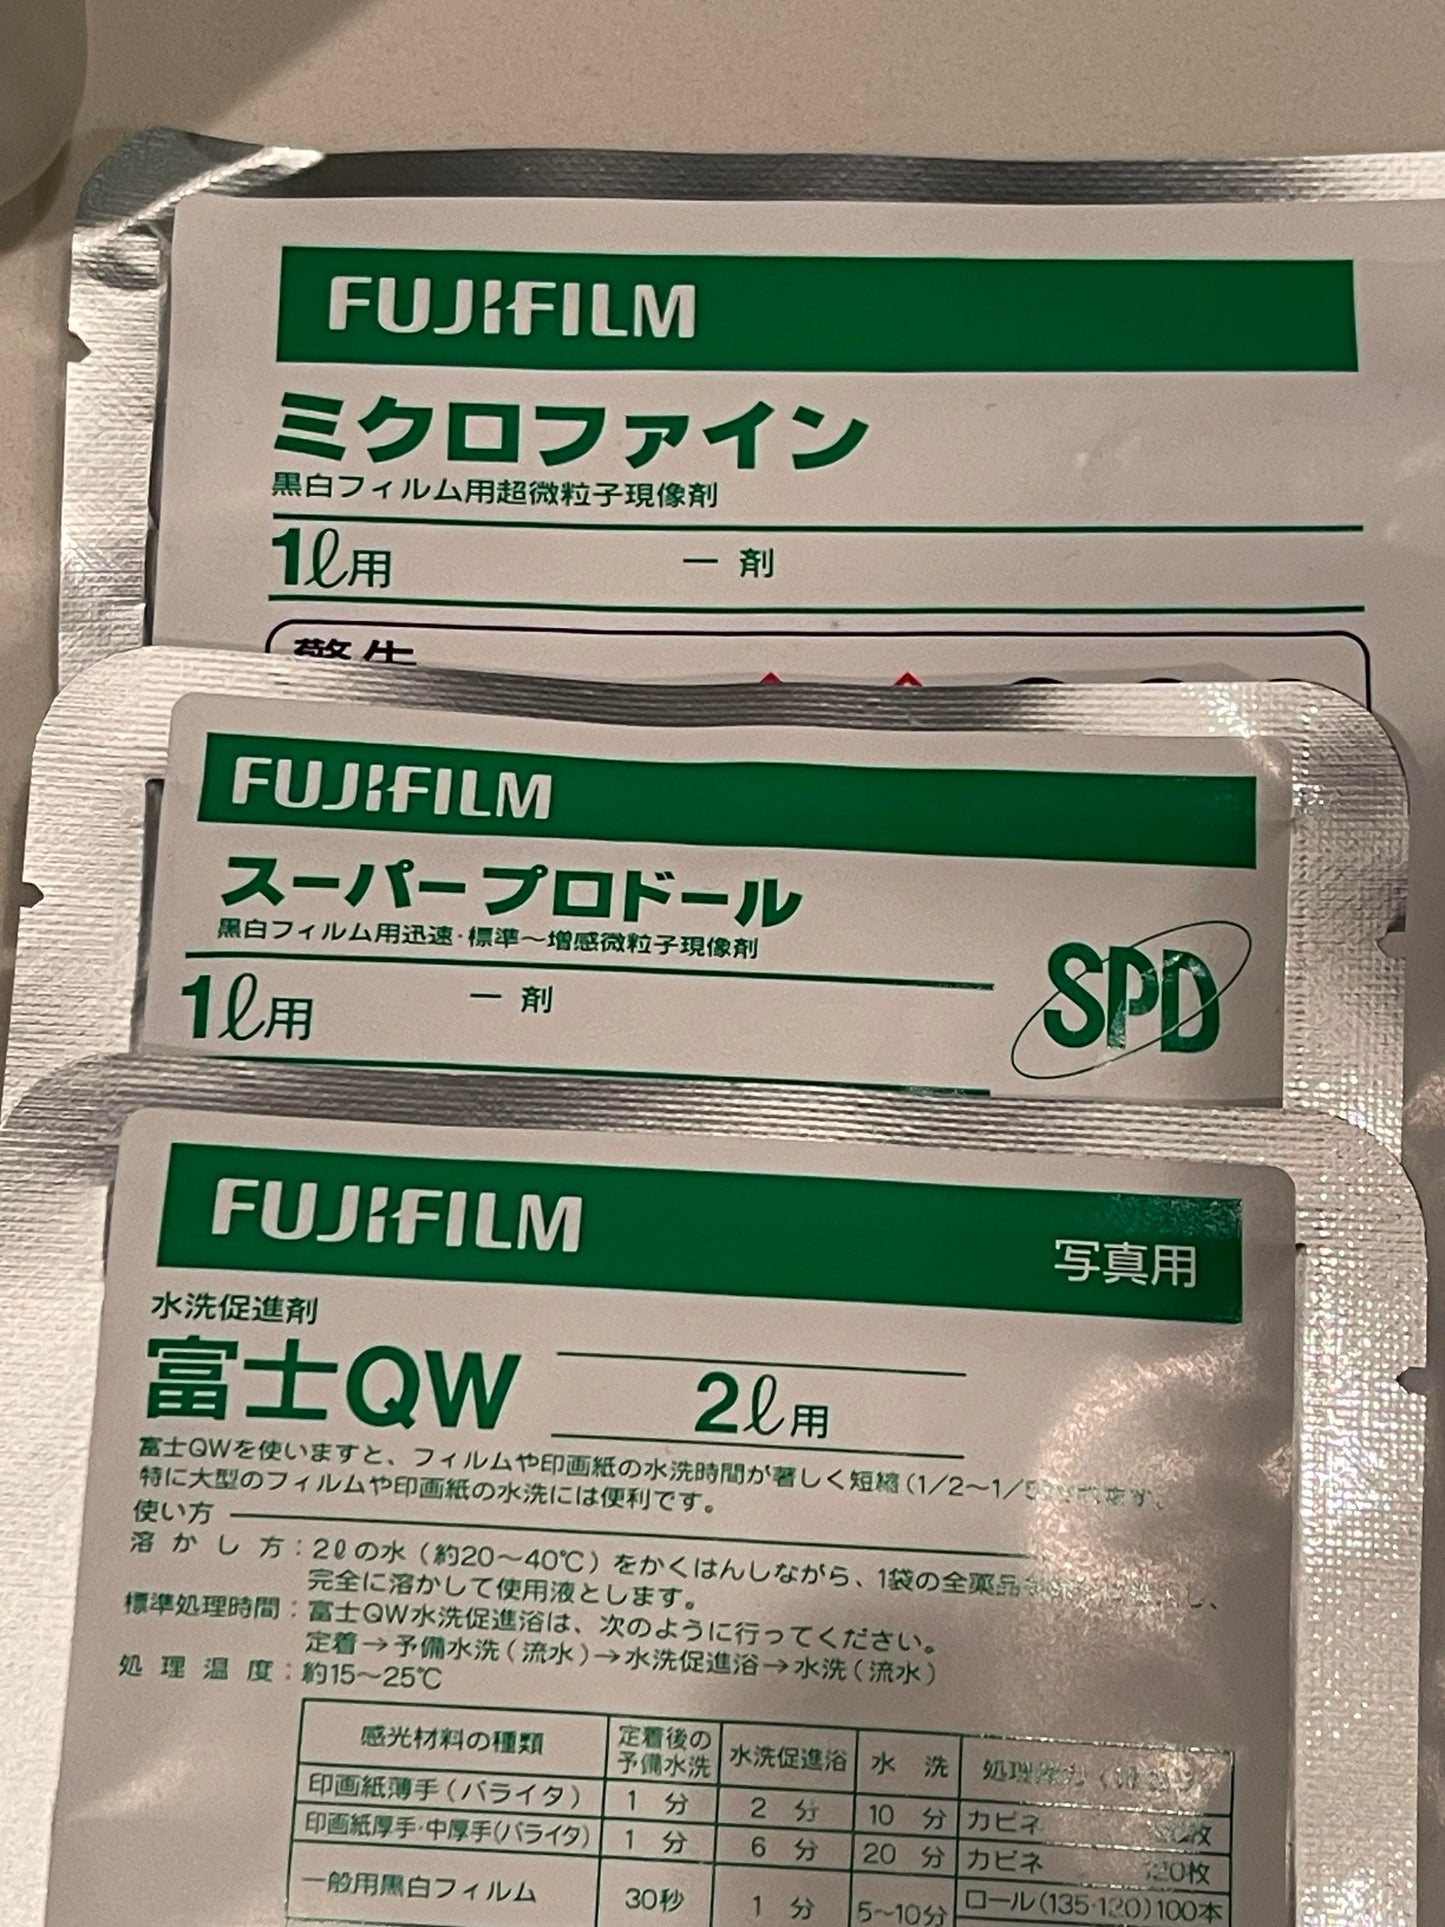 Fujifilm Super Prodol Film Developer 1 Liter For ACROS 100 II